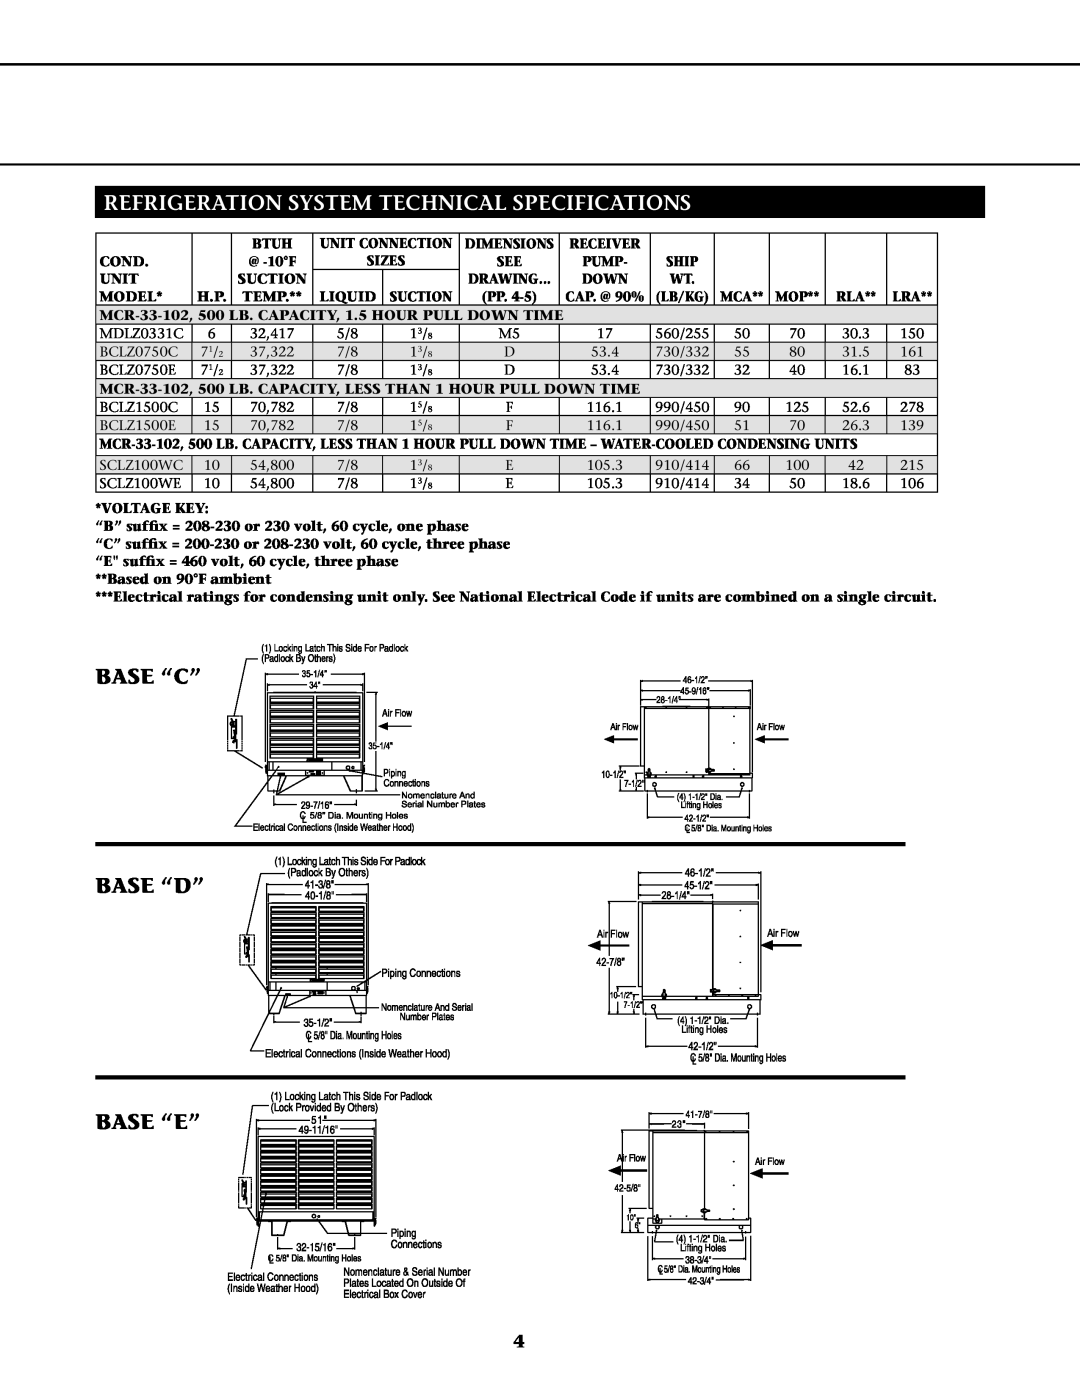 Master Bilt MCR-33-101PT, MCR-33-102PT dimensions Base “C” Base “D” Base “E”, Refrigeration System Technical Specifications 